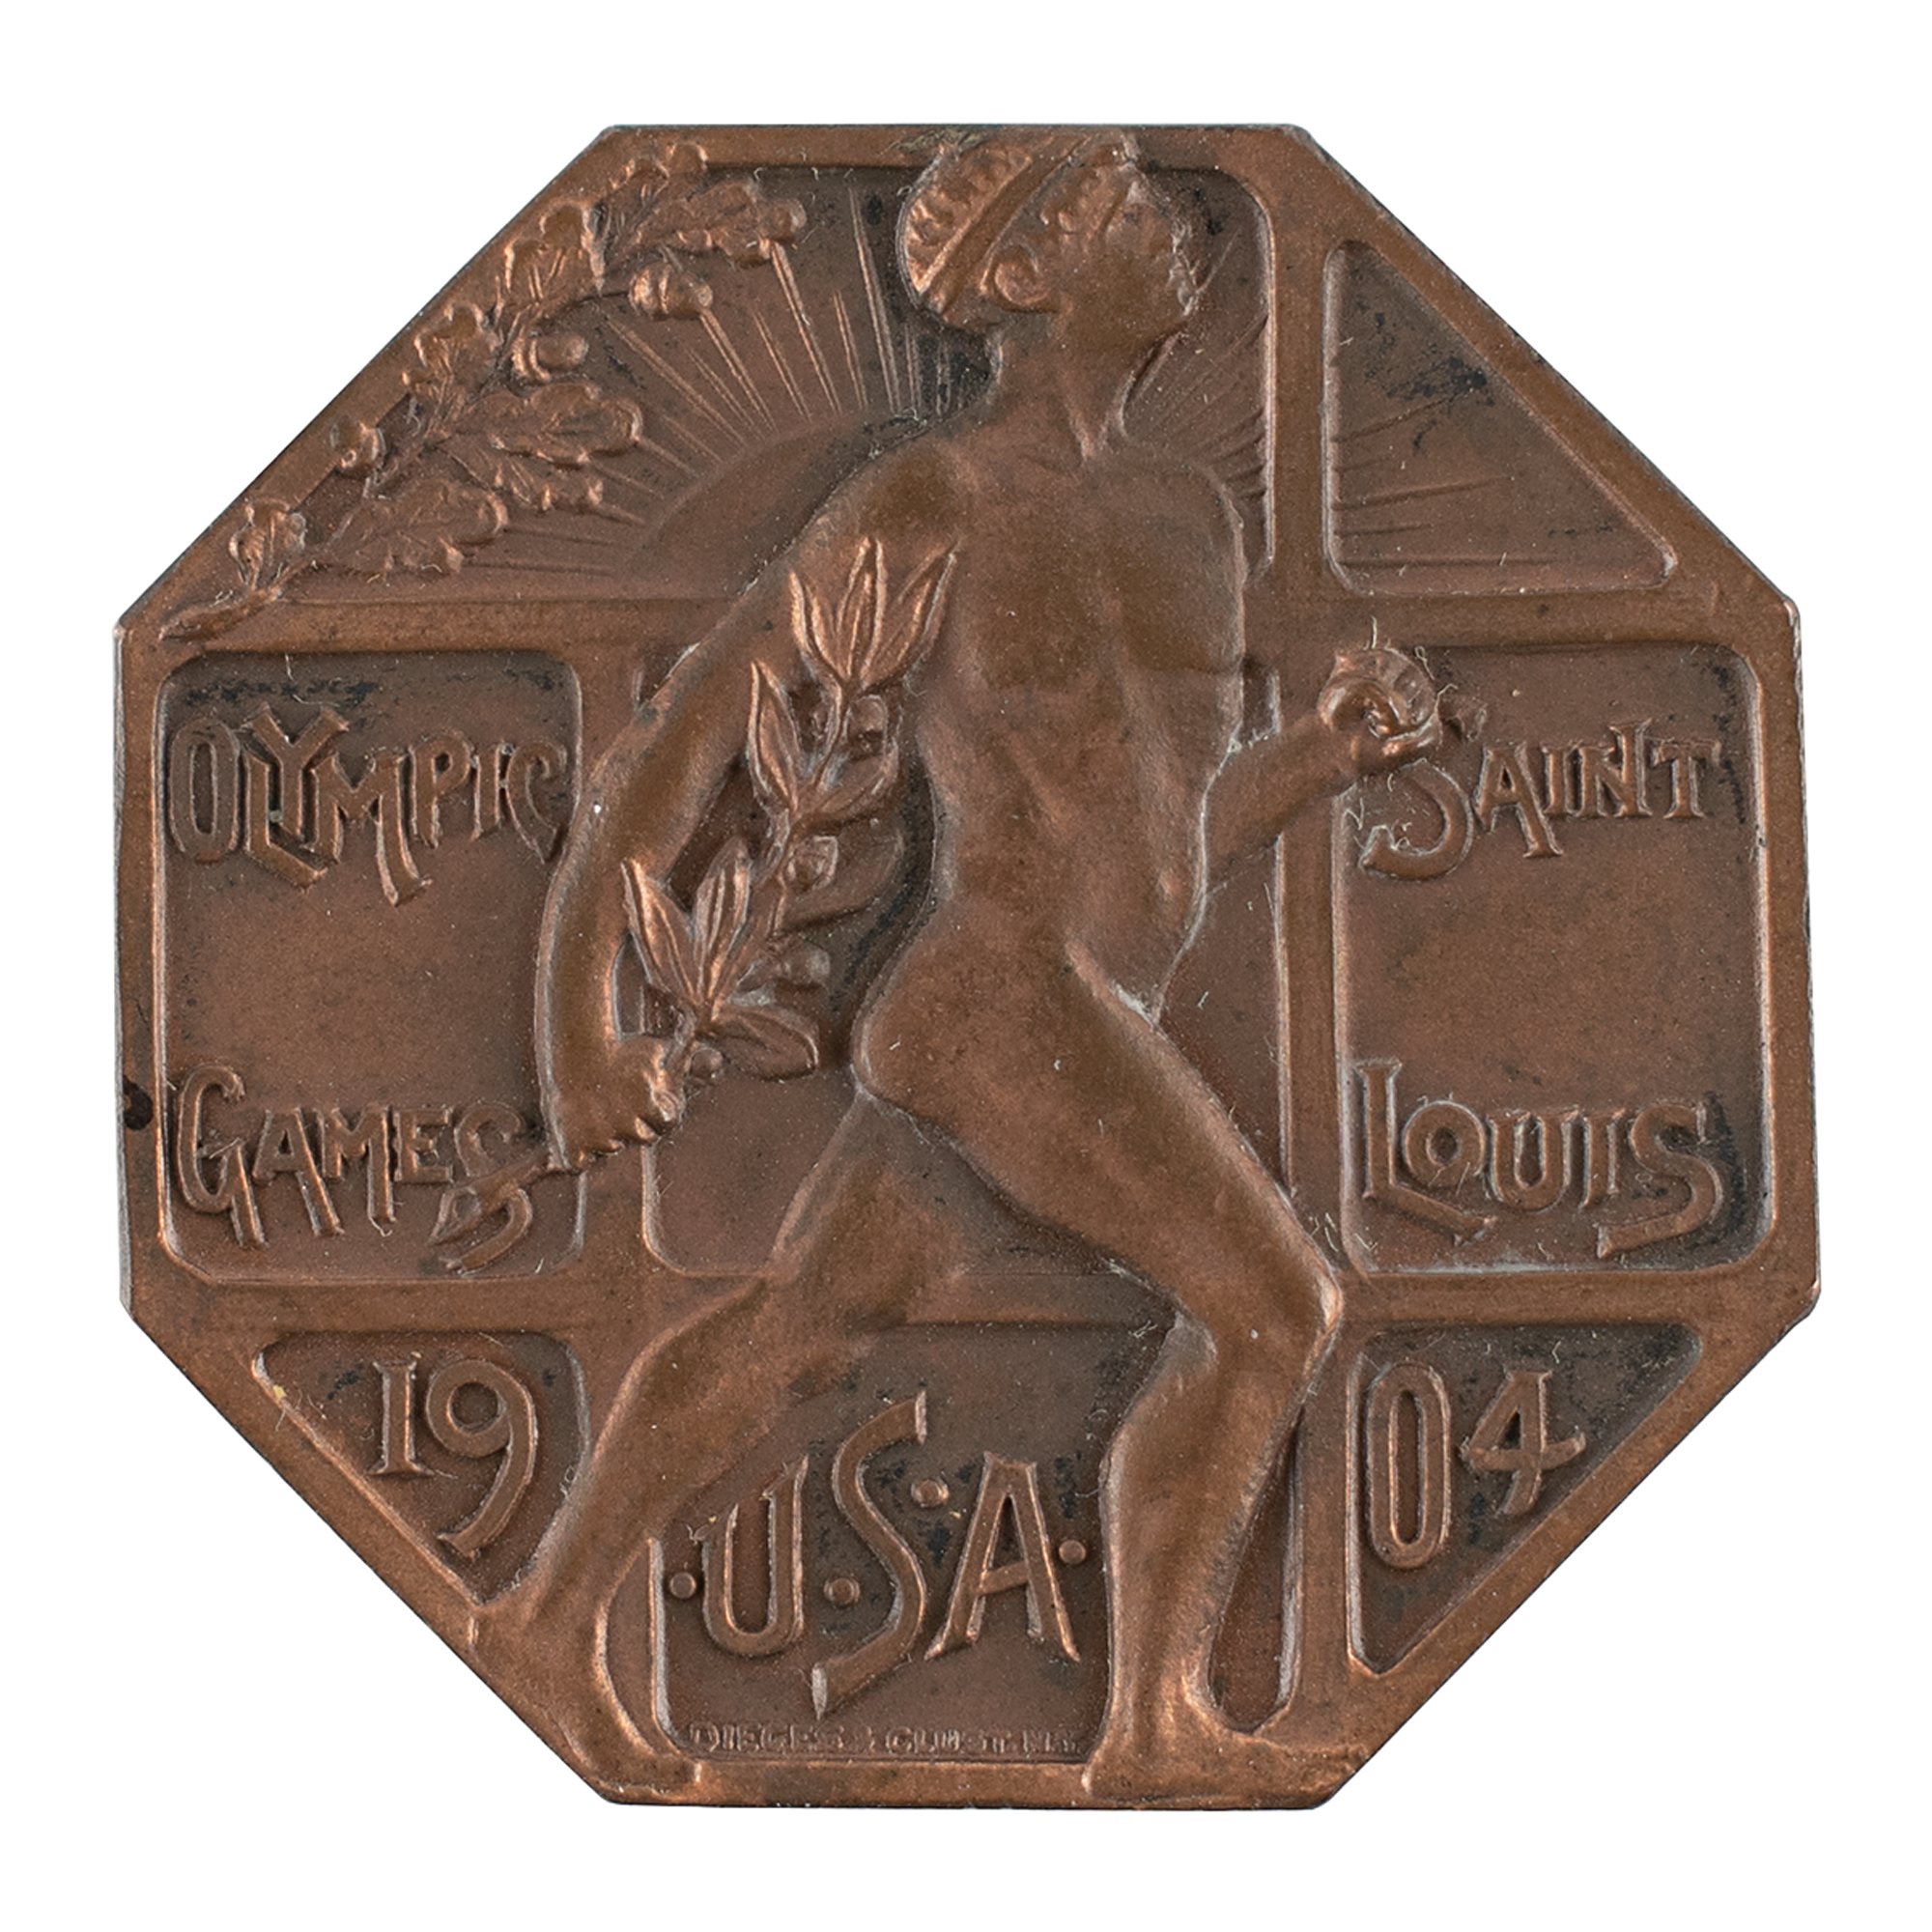 Lot #4078 St. Louis 1904 Olympics Athlete's Participation Medal/Badge